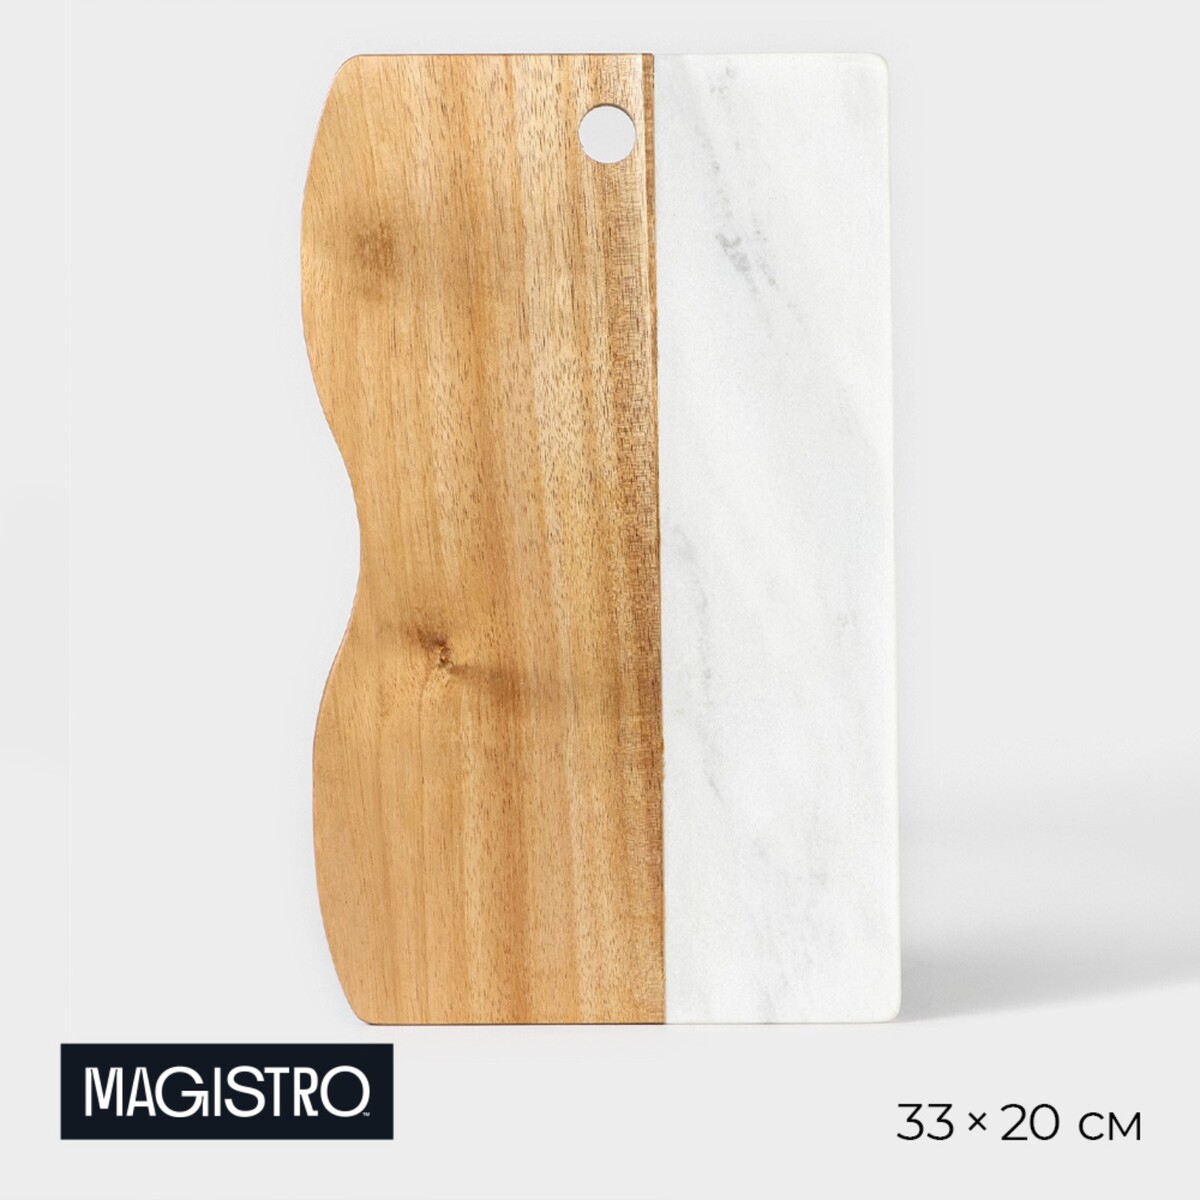 Доска для подачи magistro forest dream, 33×20 см, акация, мрамор доска для подачи из сланца magistro valley 35×20 см